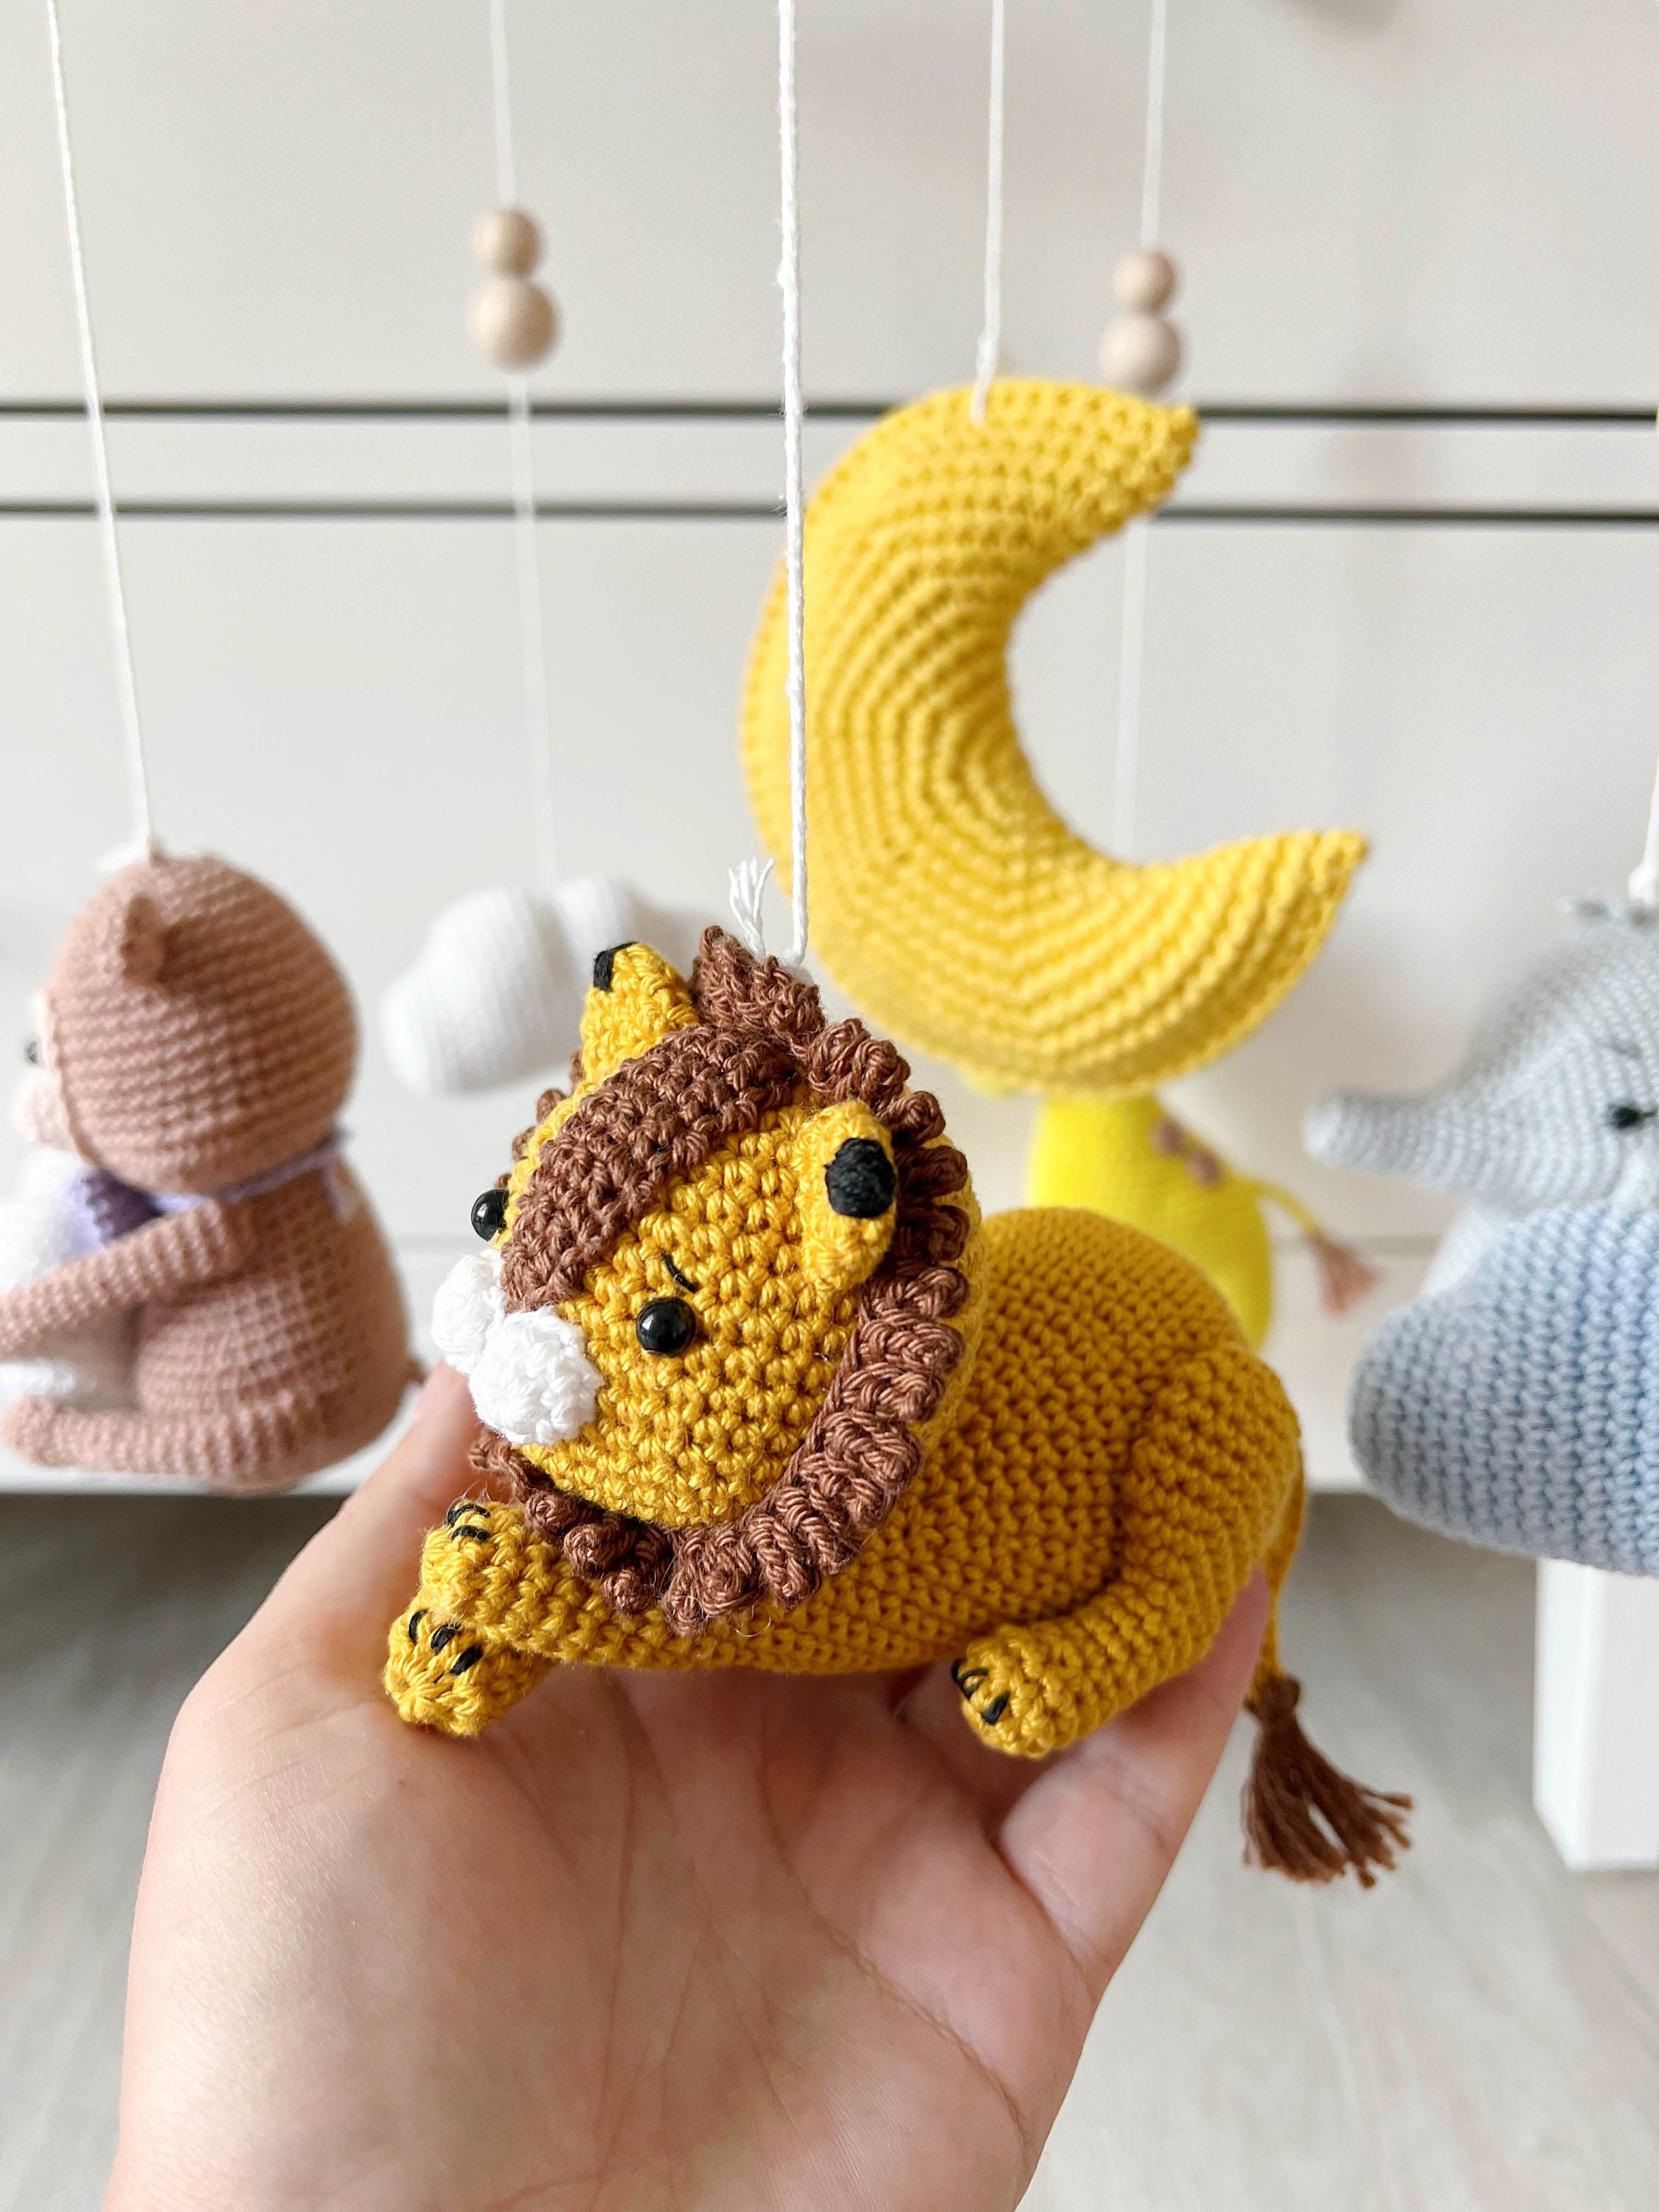 Animal Crochet Kit. Circulo Crochet Kit. Amigurumi Kit. Amigurumi Animals.  Crochet Gift. Lion, Koala, Bear, Monkey & Giraffe Baby Animals. 